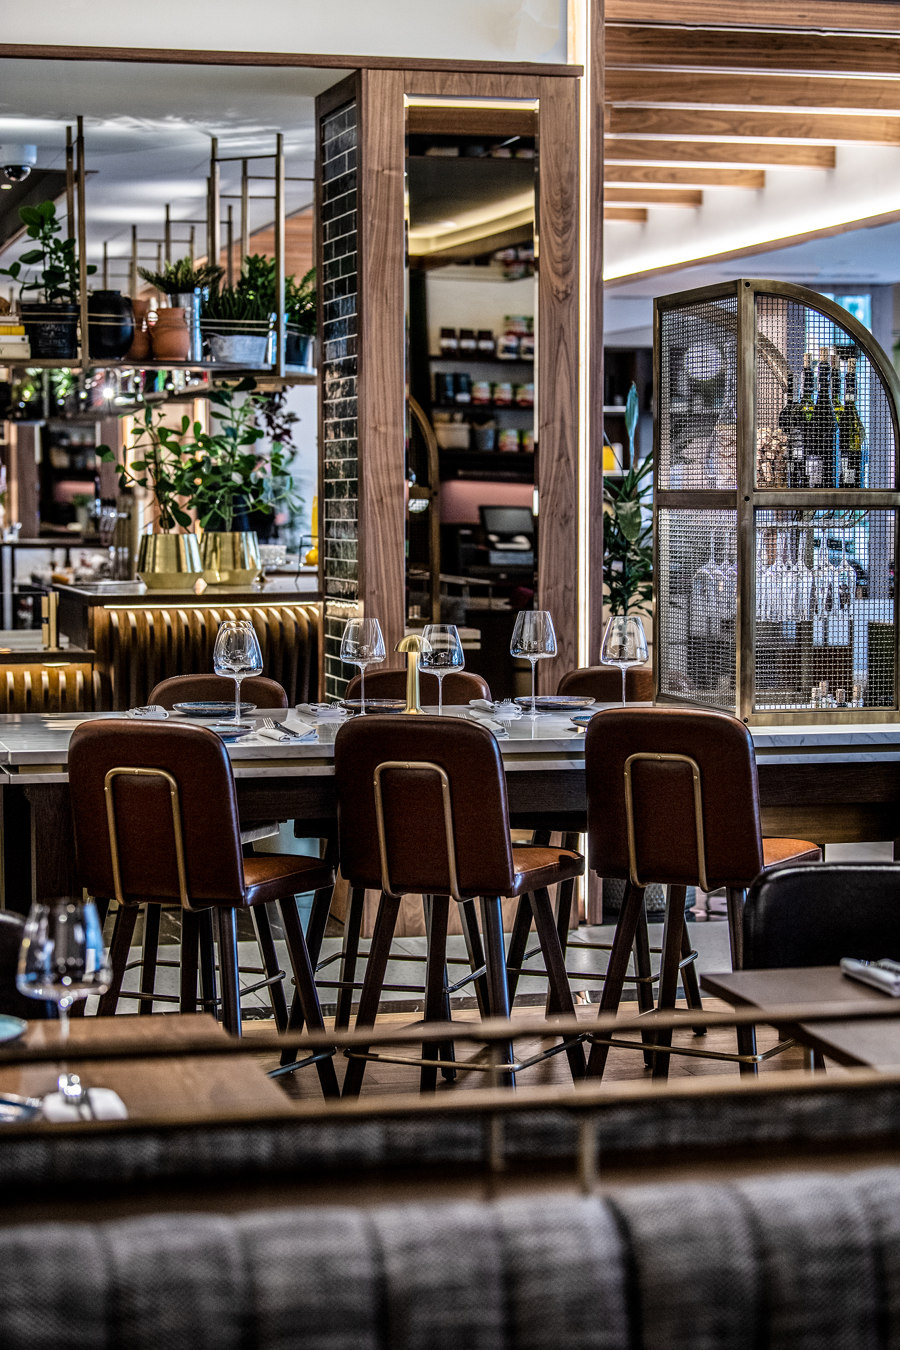 Sheraton Grand Warsaw by Epicurean | Restaurant interiors